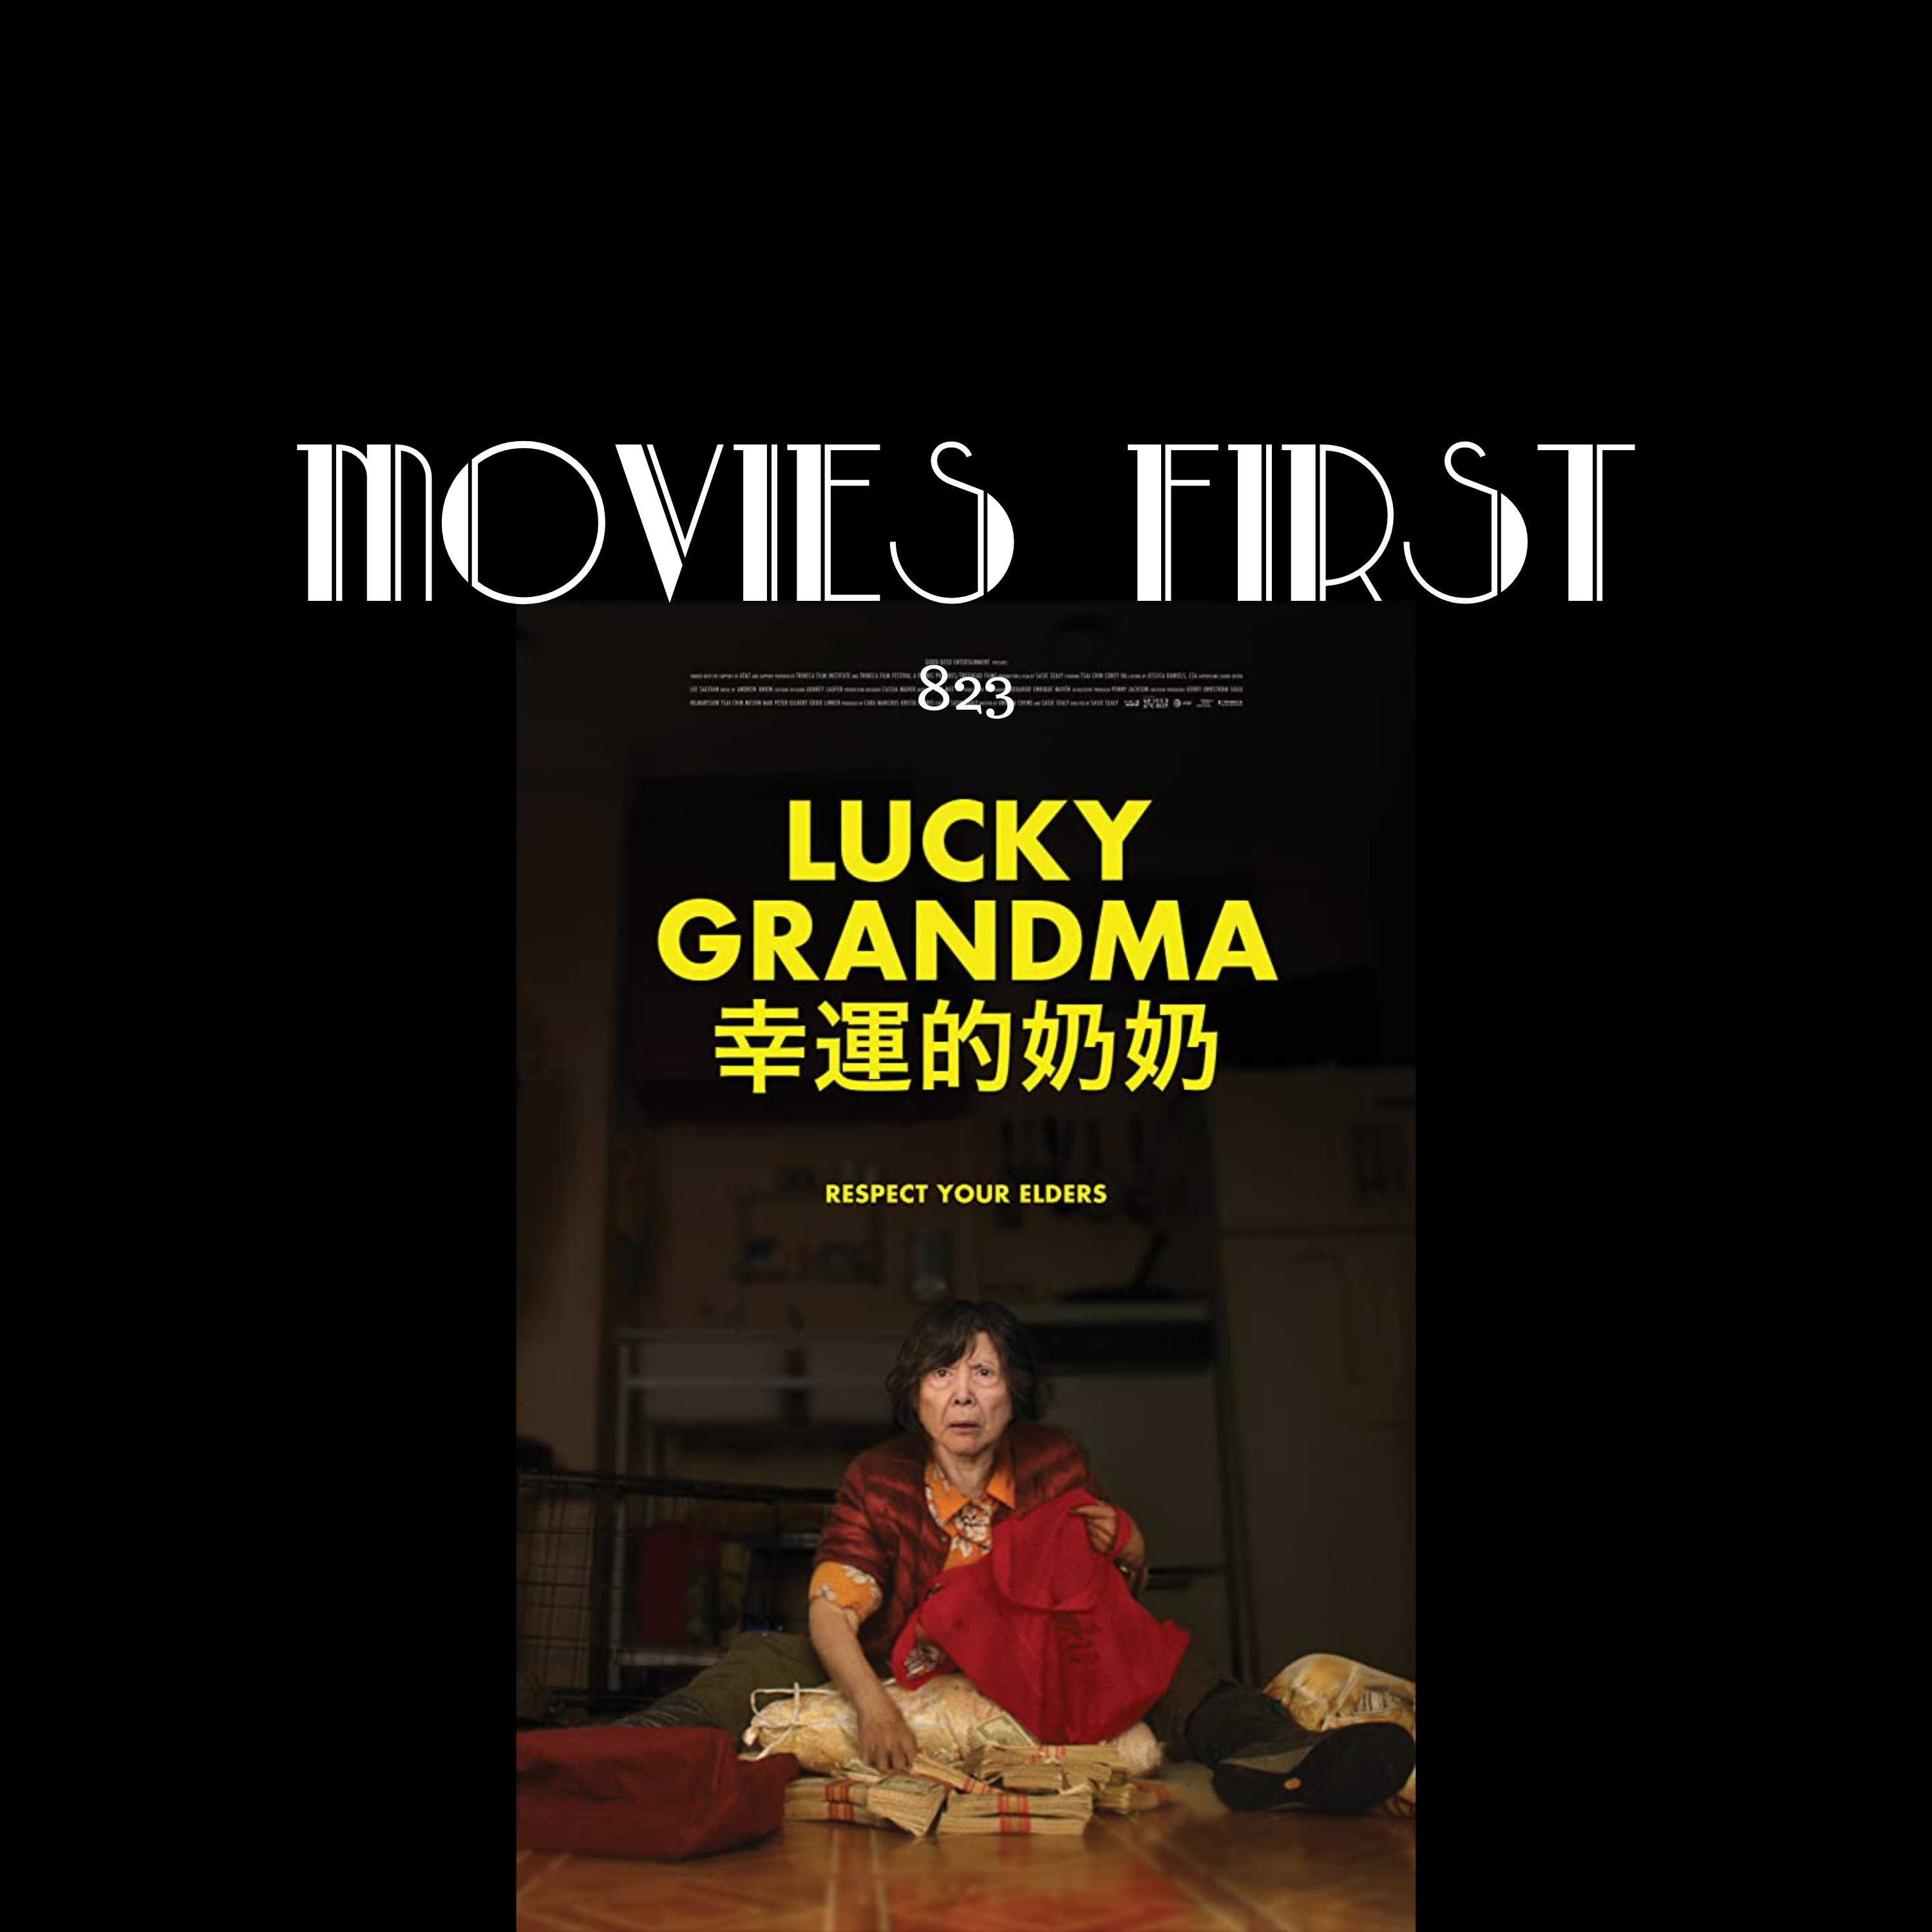 Lucky Grandma (Comedy, Drama) (the @MoviesFirst review)